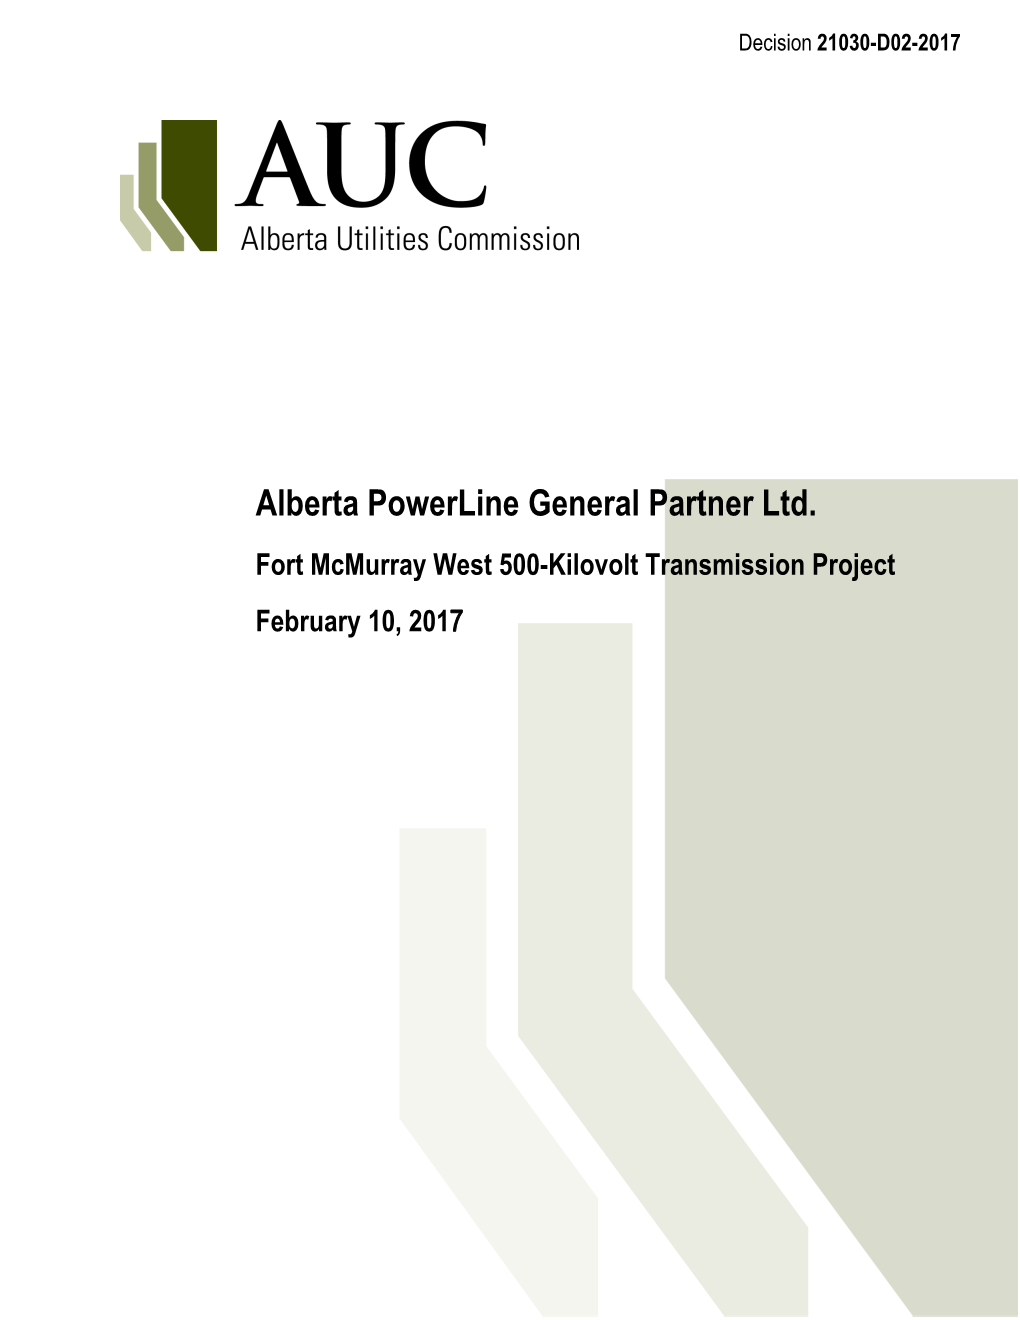 Alberta Powerline General Partner Ltd. Fort Mcmurray West 500-Kilovolt Transmission Project February 10, 2017